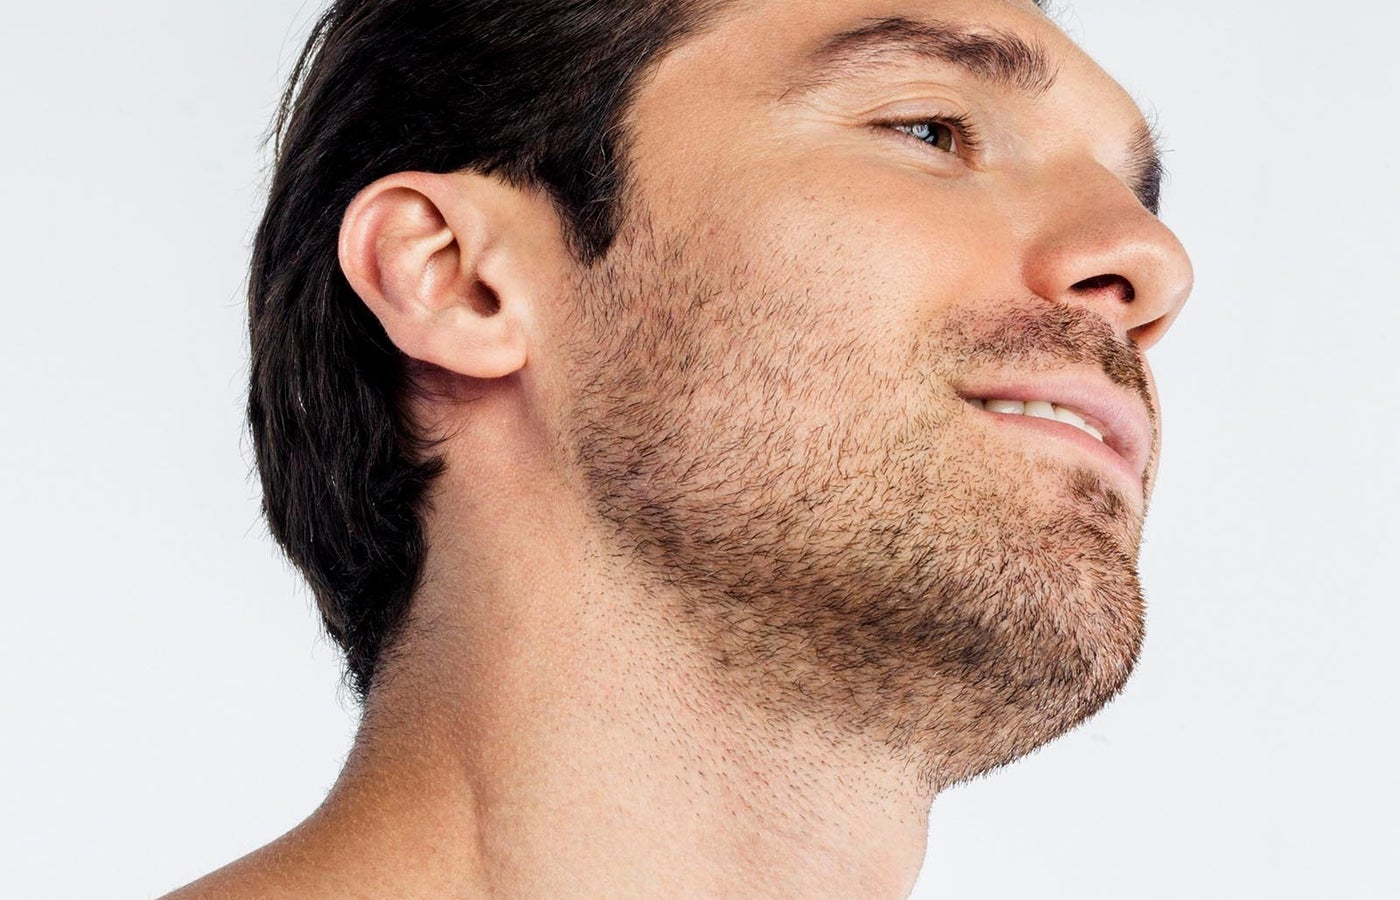 Beard Transplant: Pros & Cons, Risks, Recovery | RealSelf